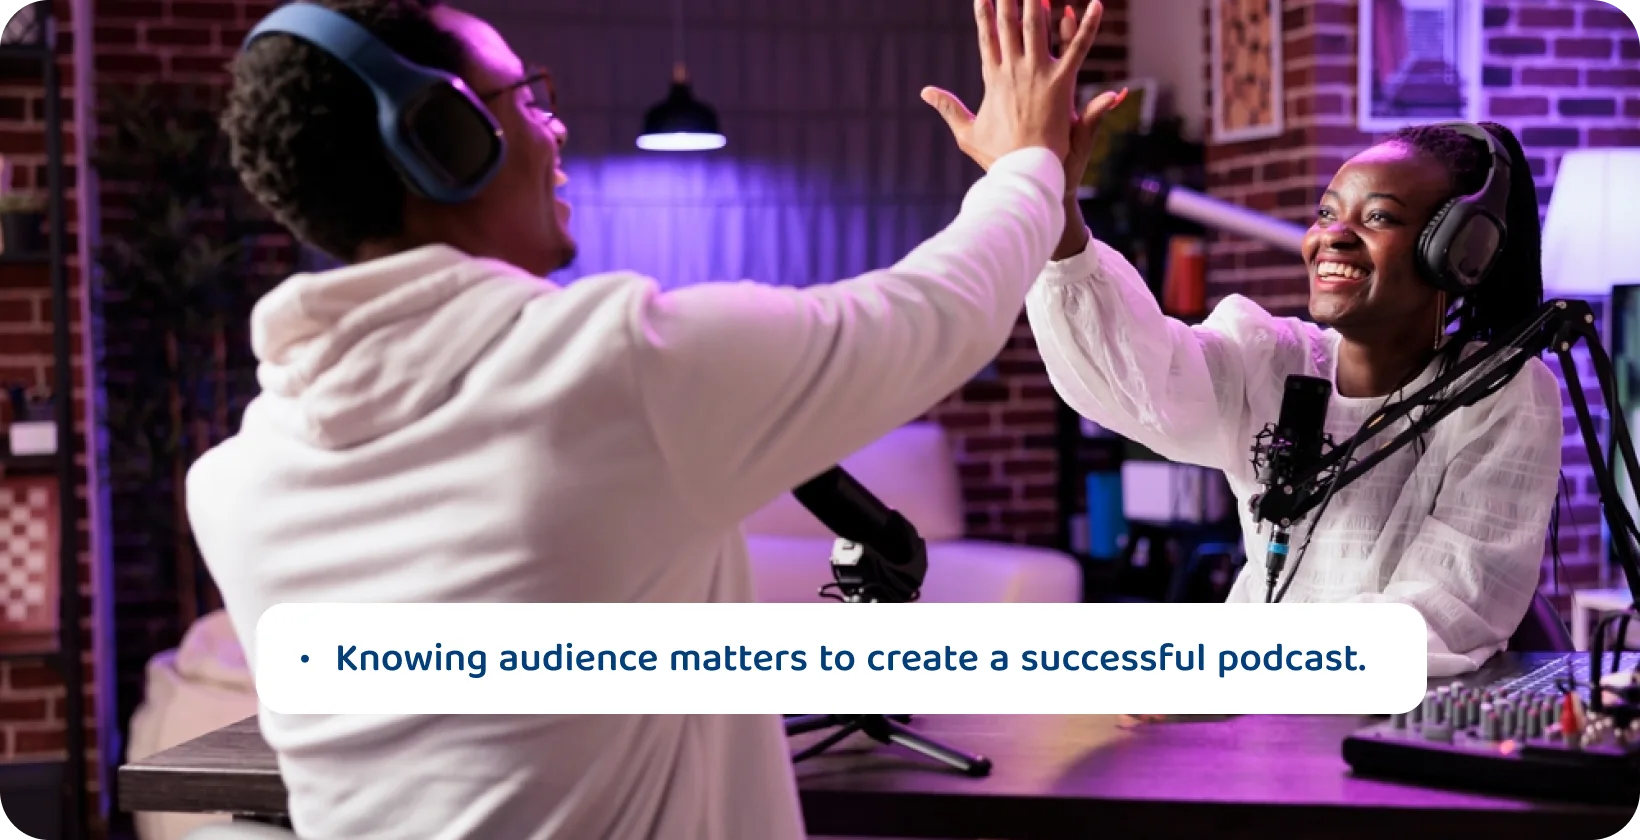 Host podcast melakukan high-fiving dalam pengaturan studio, menandakan kegembiraan mengetahui audiens mereka untuk kesuksesan podcast.